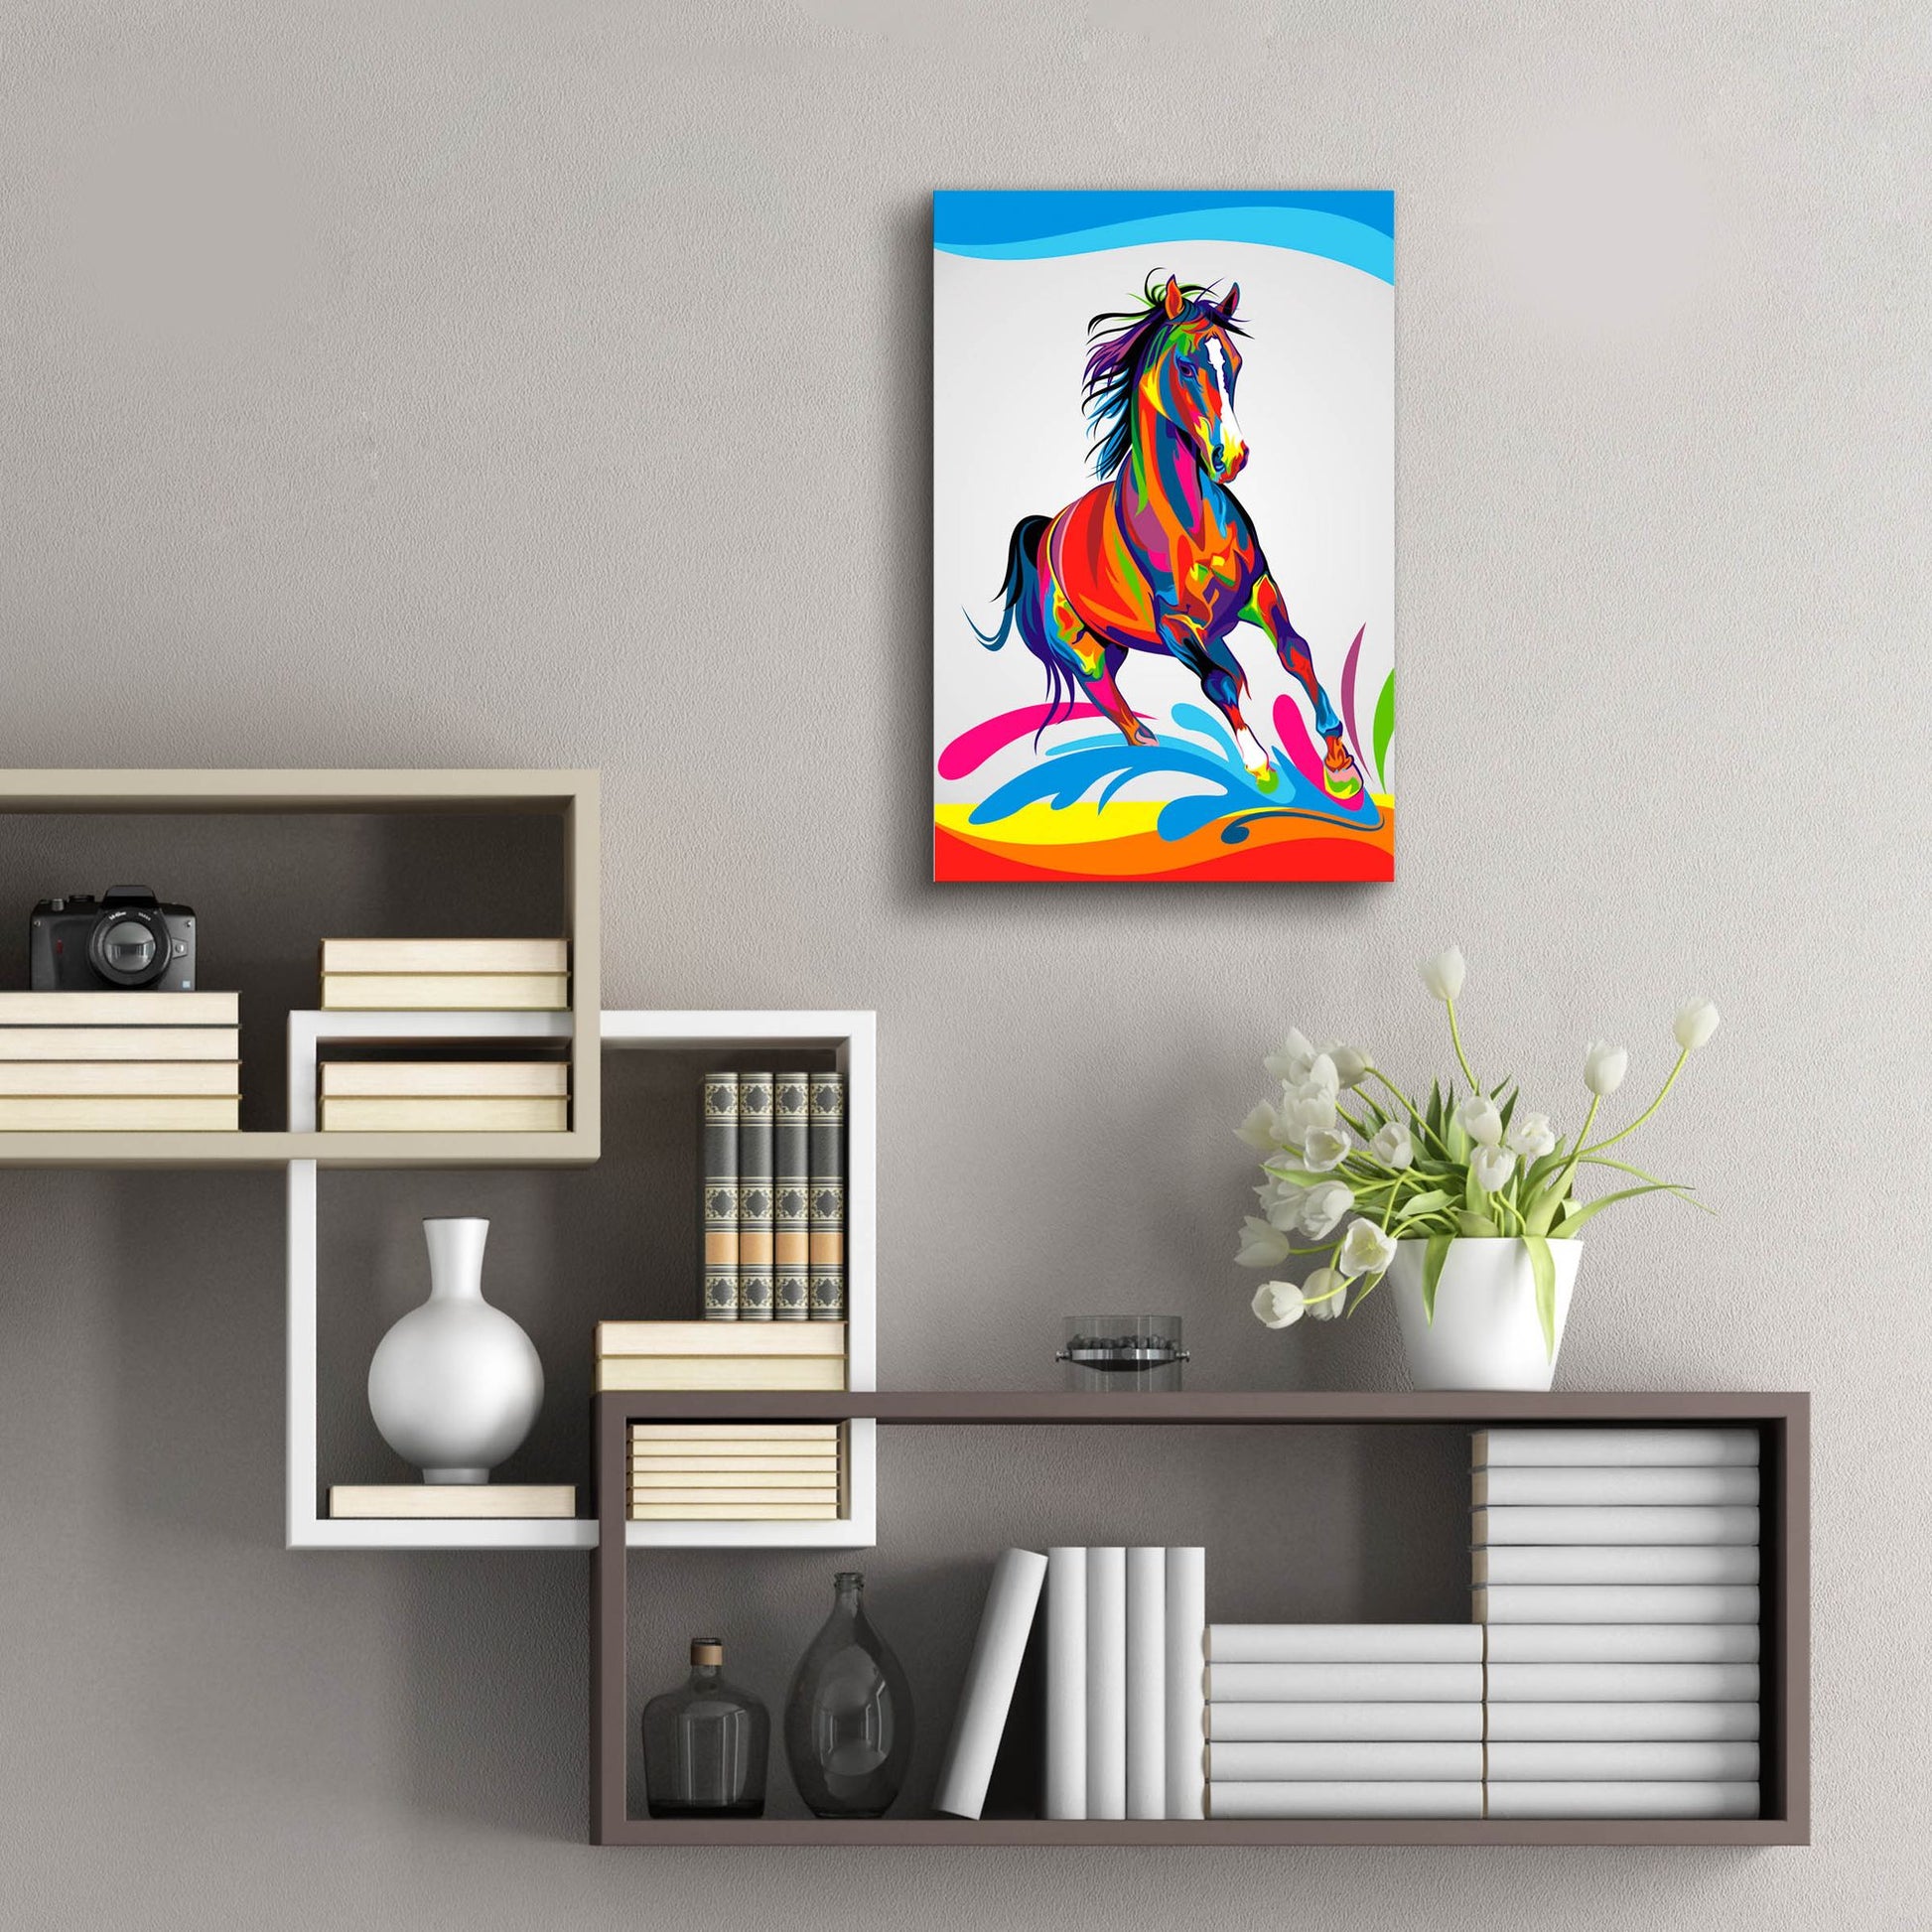 Epic Art 'Horse' by Bob Weer, Acrylic Glass Wall Art,16x24